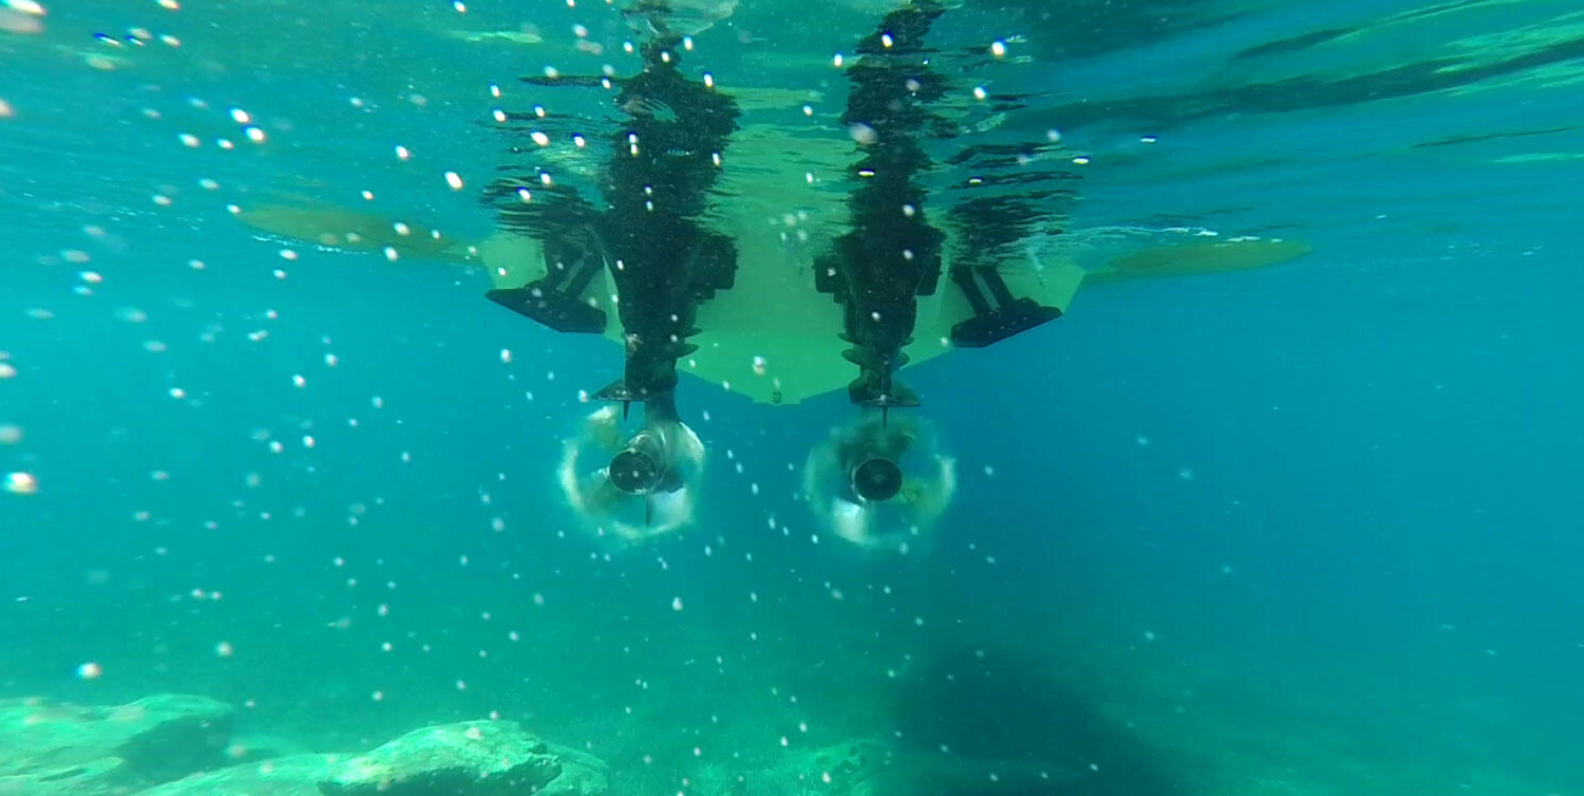 underwater look at propellers, props spinning underwater